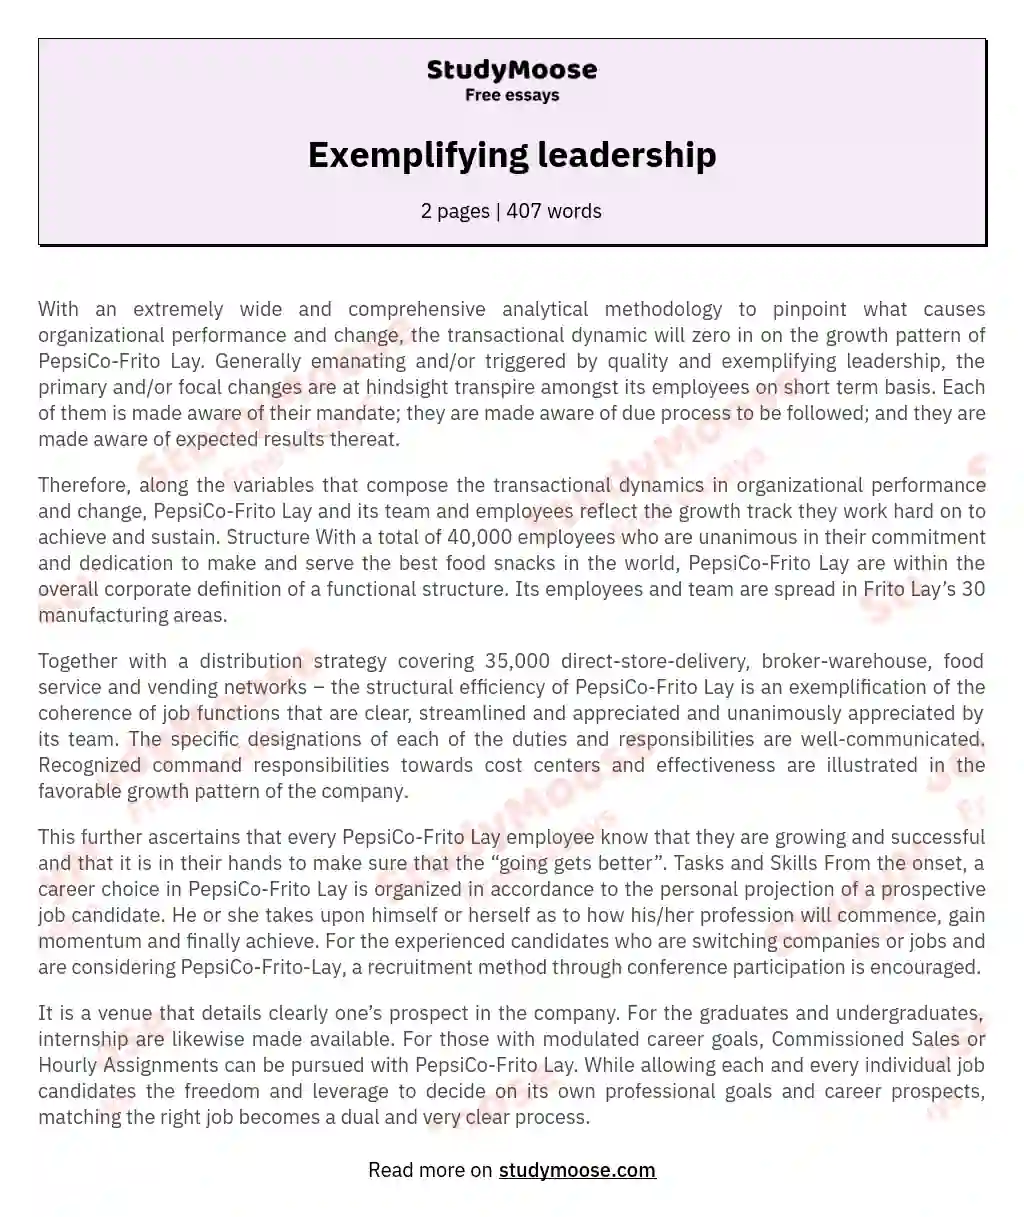 Exemplifying leadership